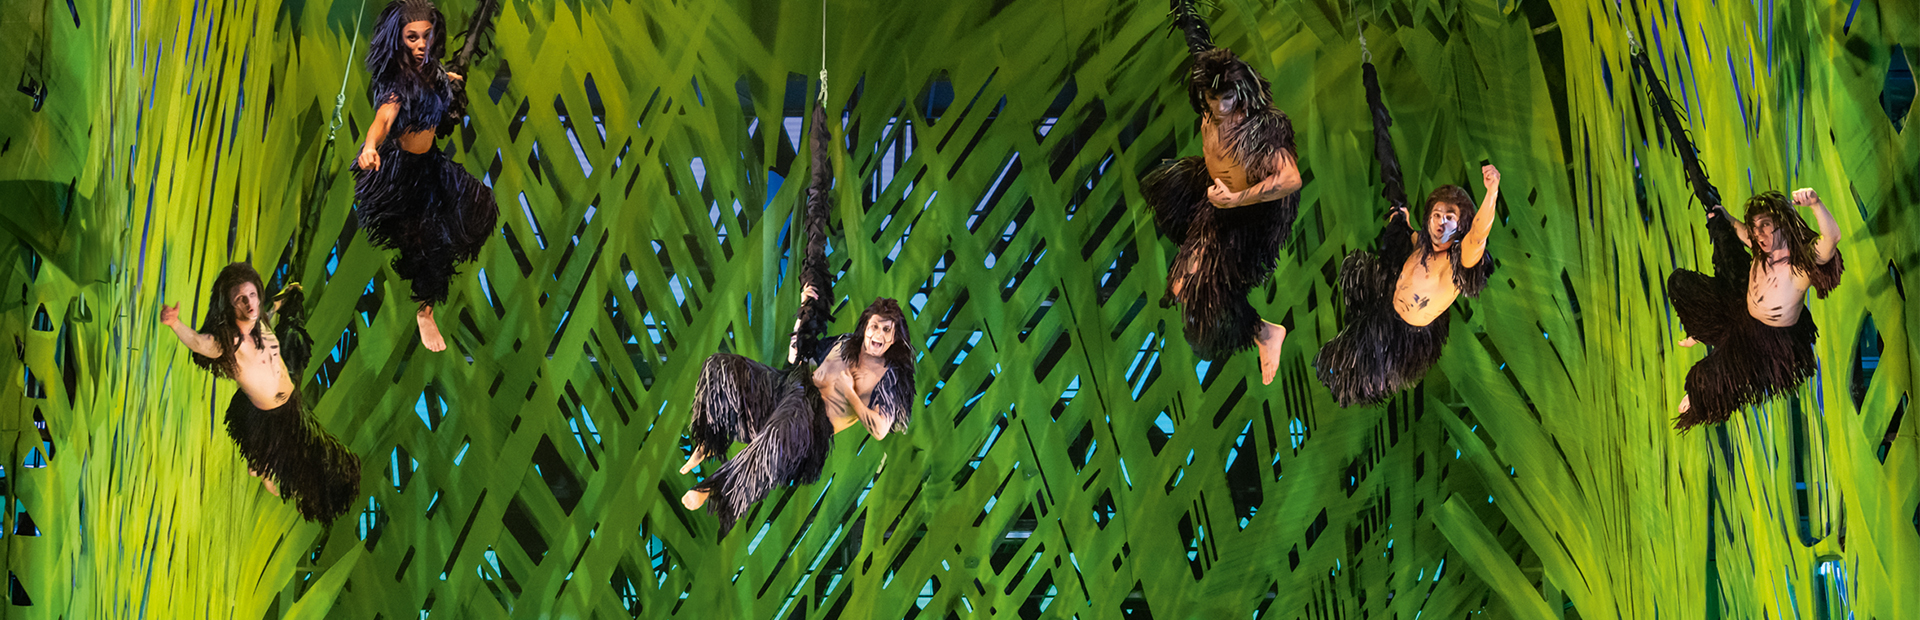 Gorilla Familie von Tarzan an Lianen